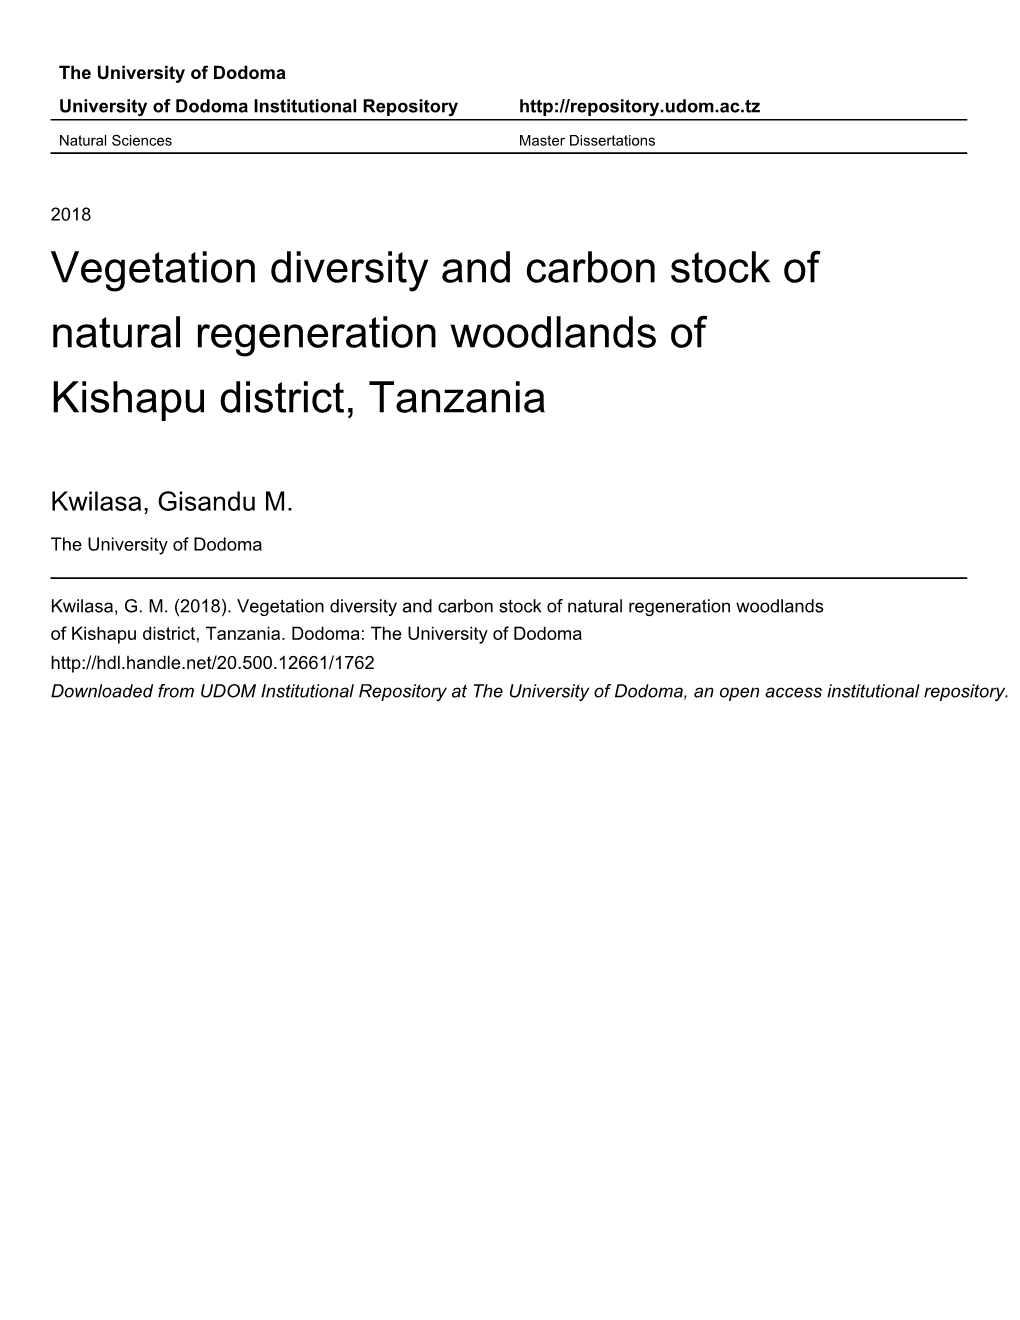 Vegetation Diversity and Carbon Stock of Natural Regeneration Woodlands of Kishapu District, Tanzania